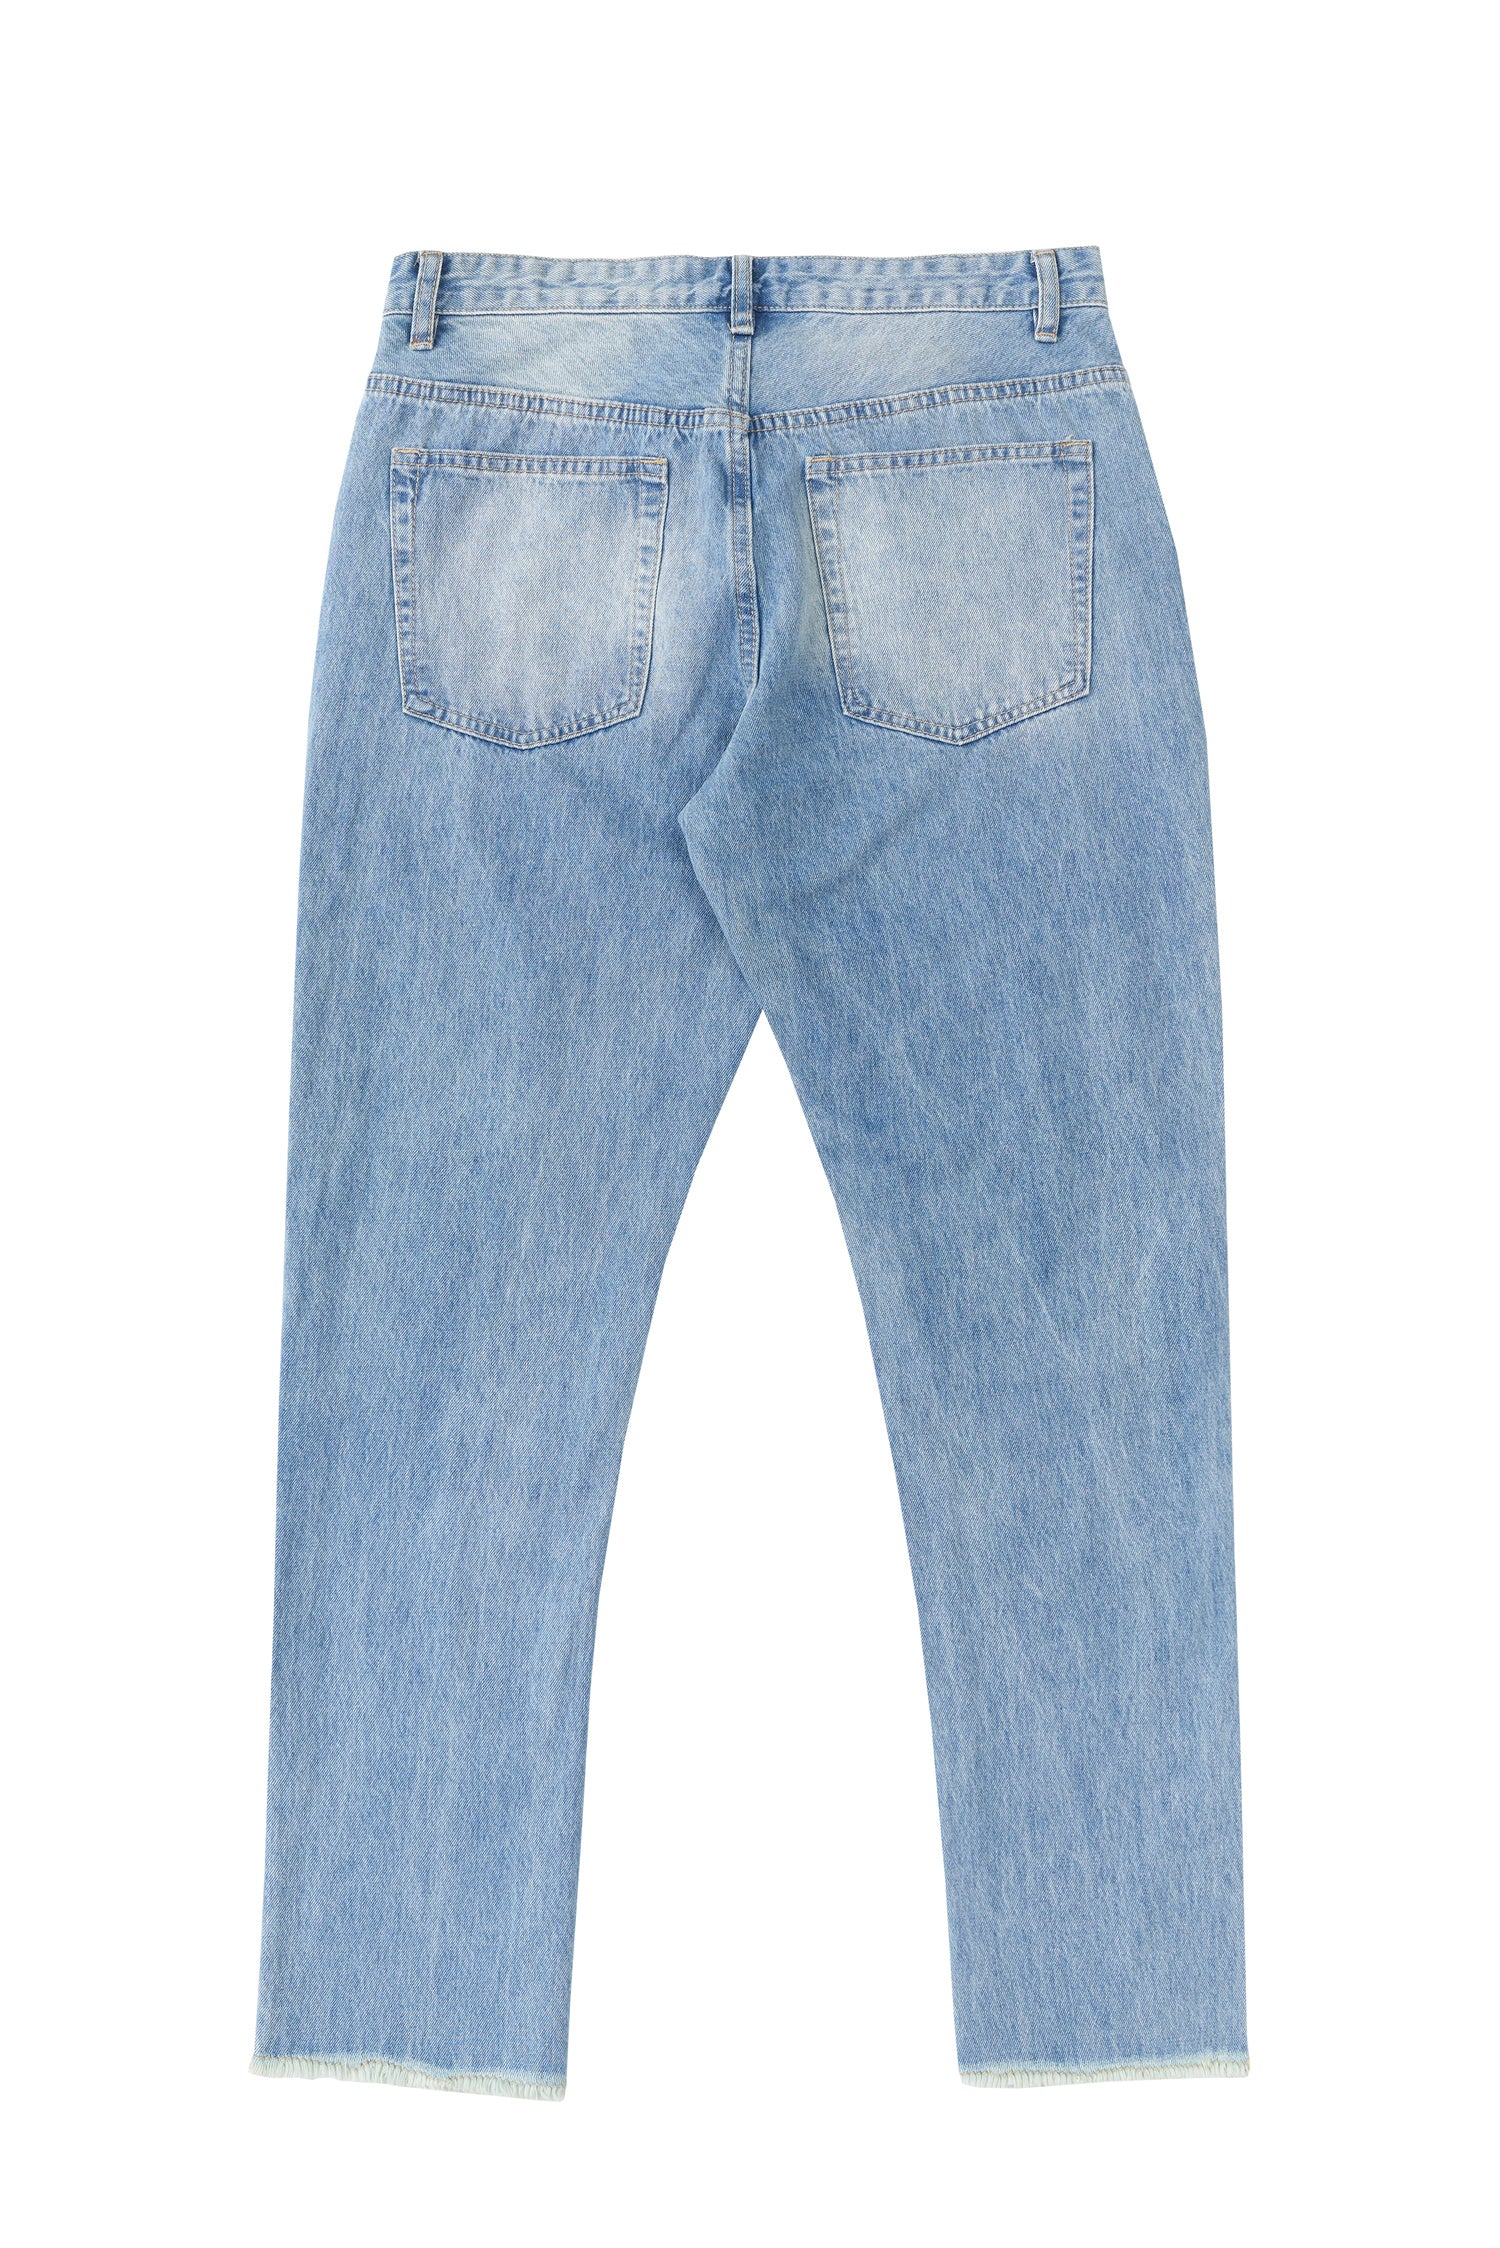 Jeans Lightning Stitching Fabric Ragged Hip-hop Pants For Men - ROMART GLOBAL LTD